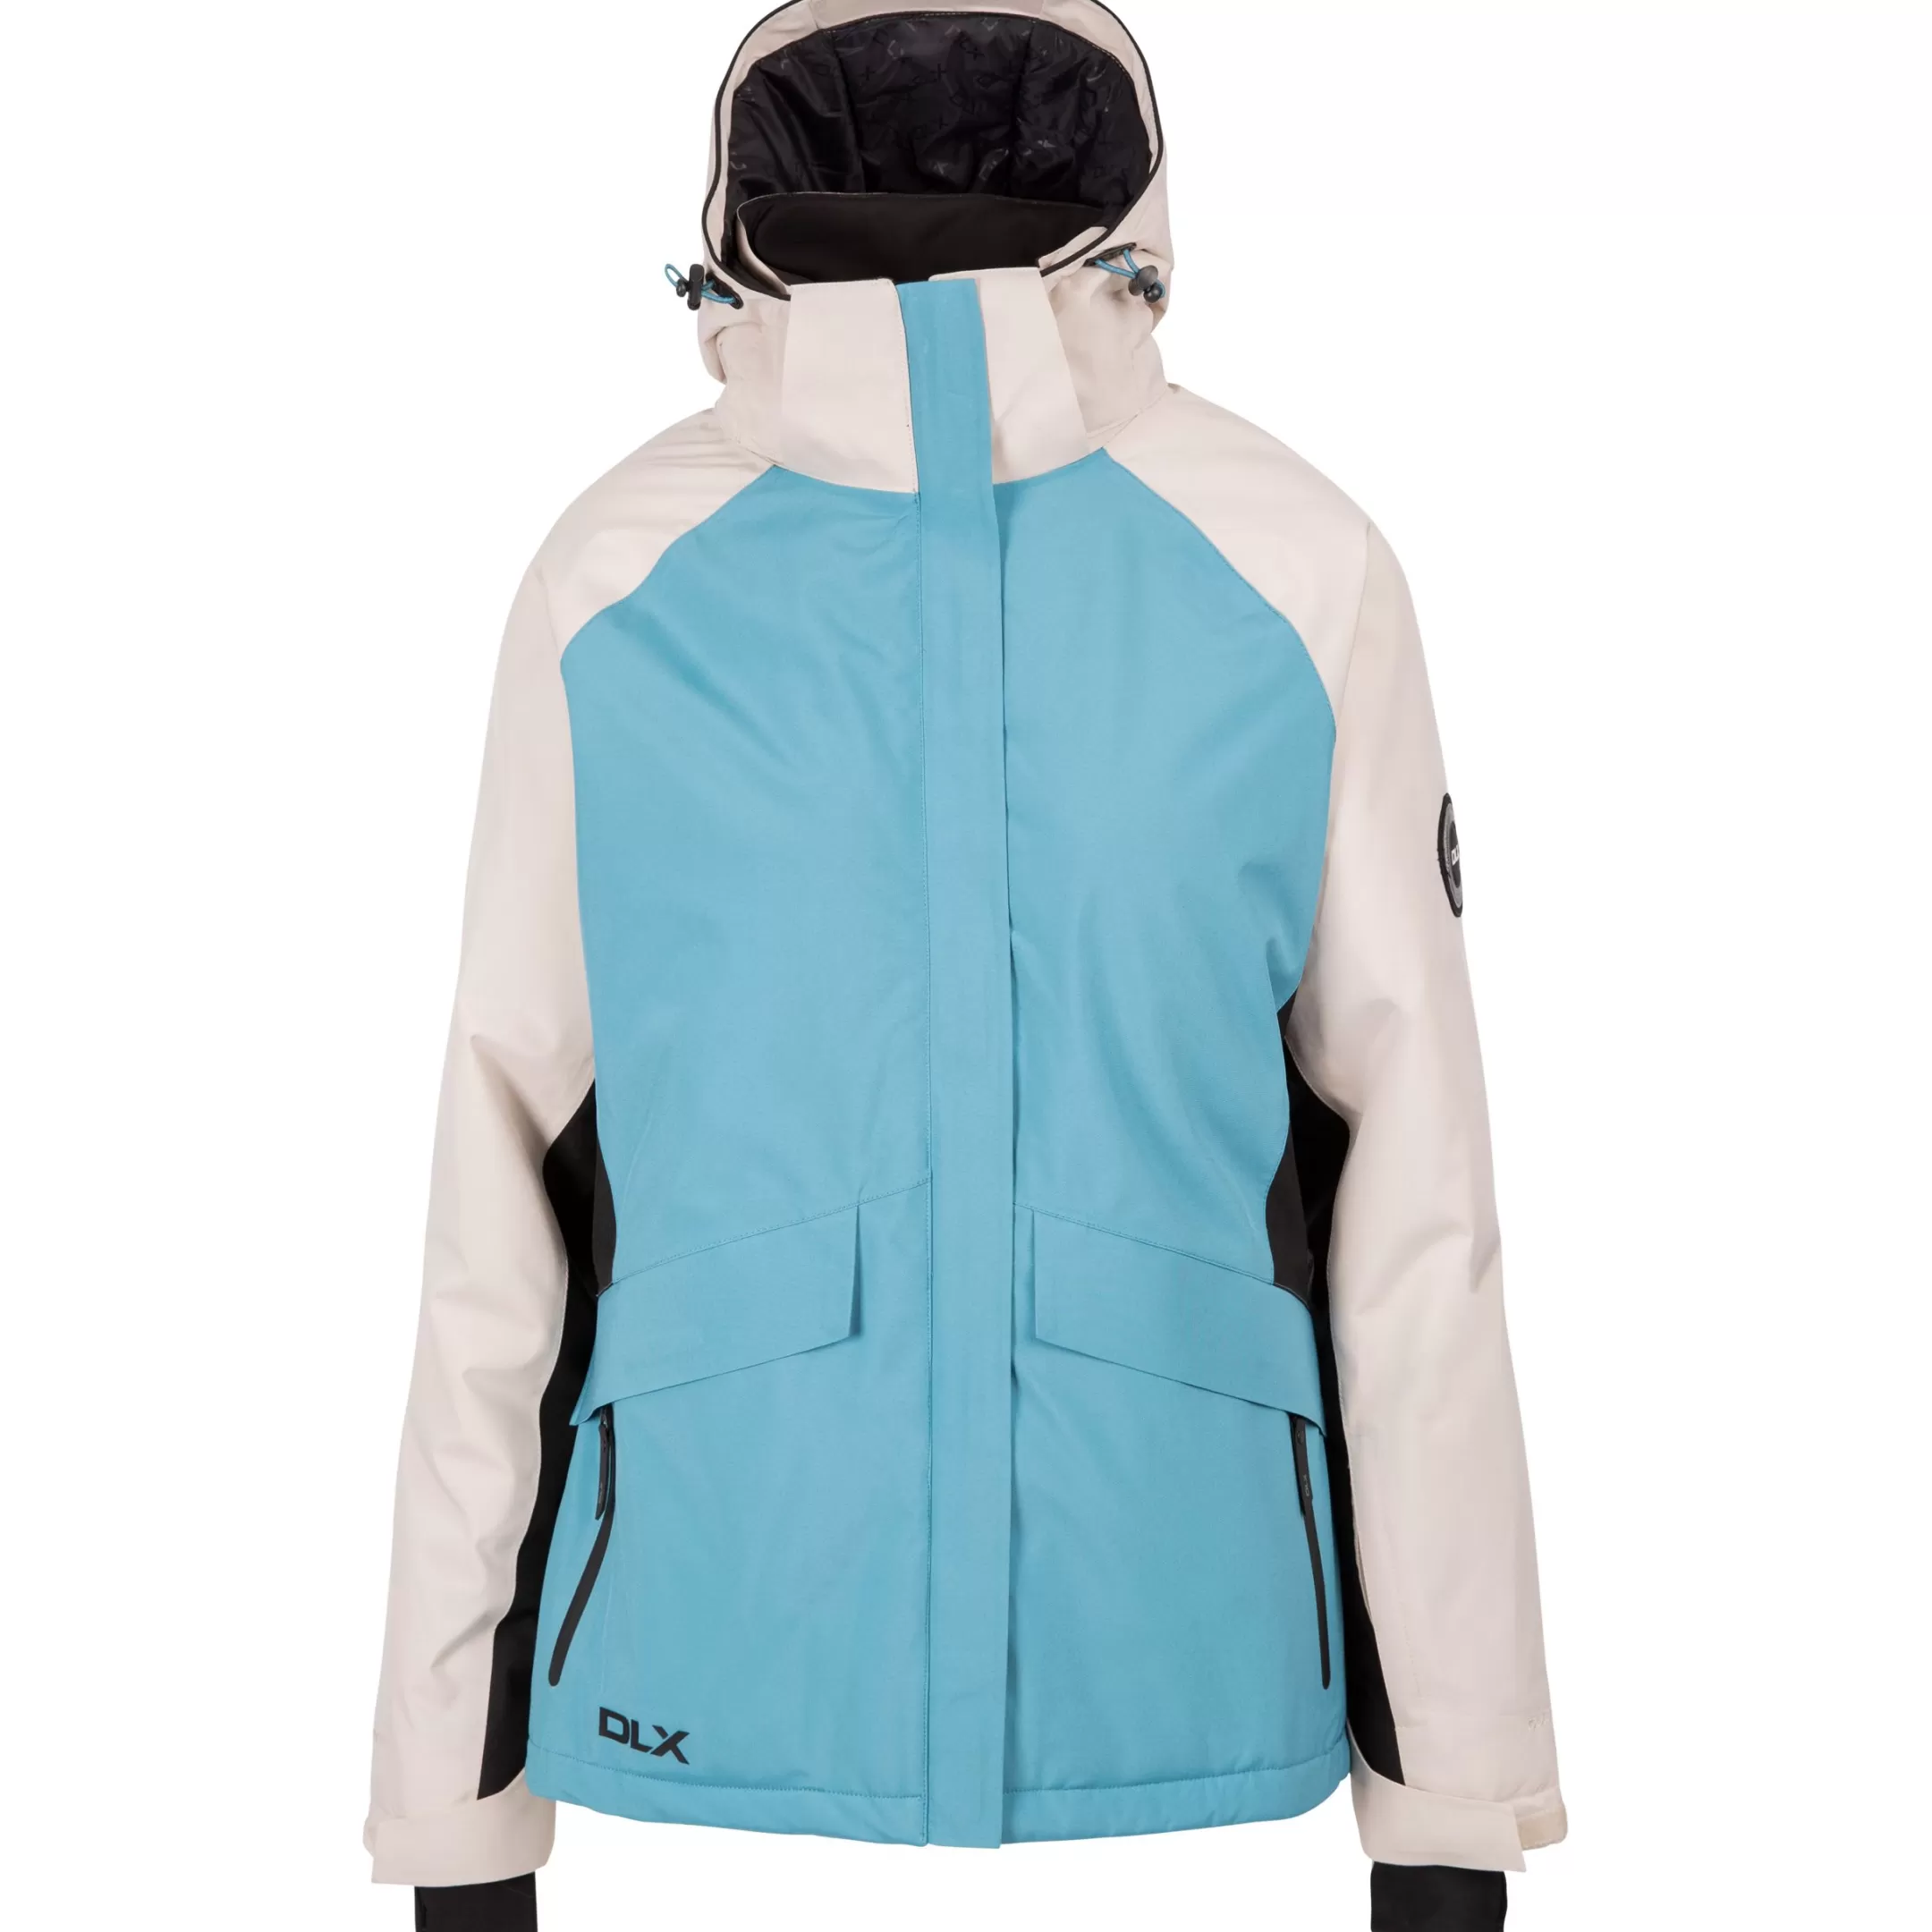 Womens DLX Ski Jacket Ursula | Trespass Cheap